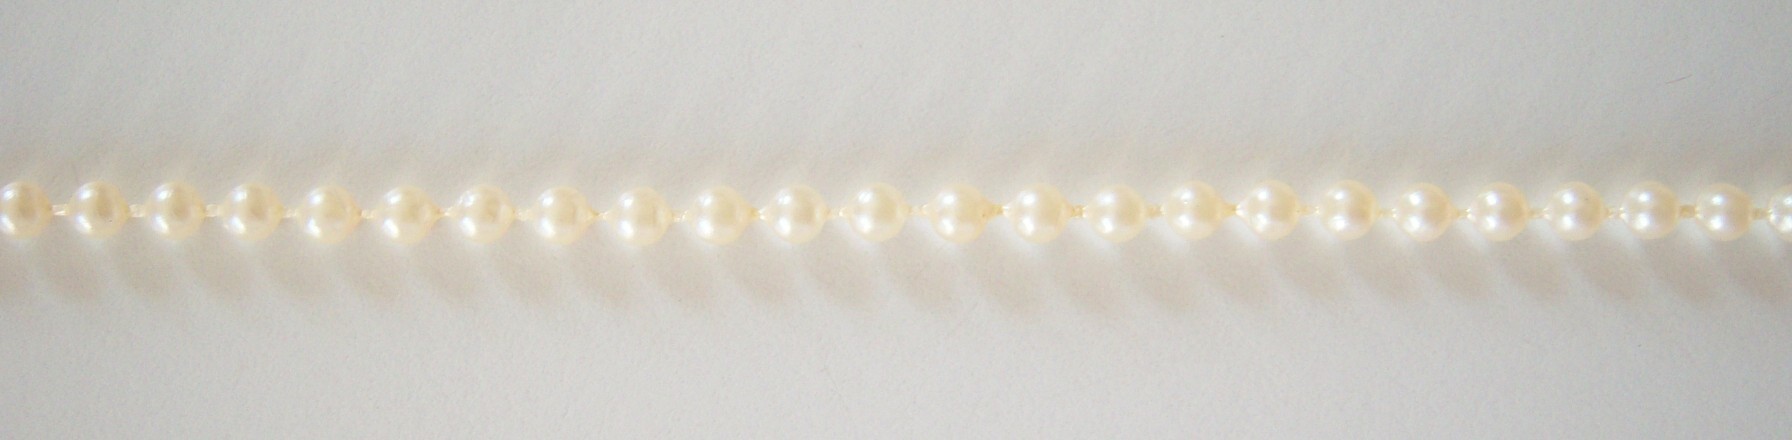 Ivory 4mm Imitation Pearls